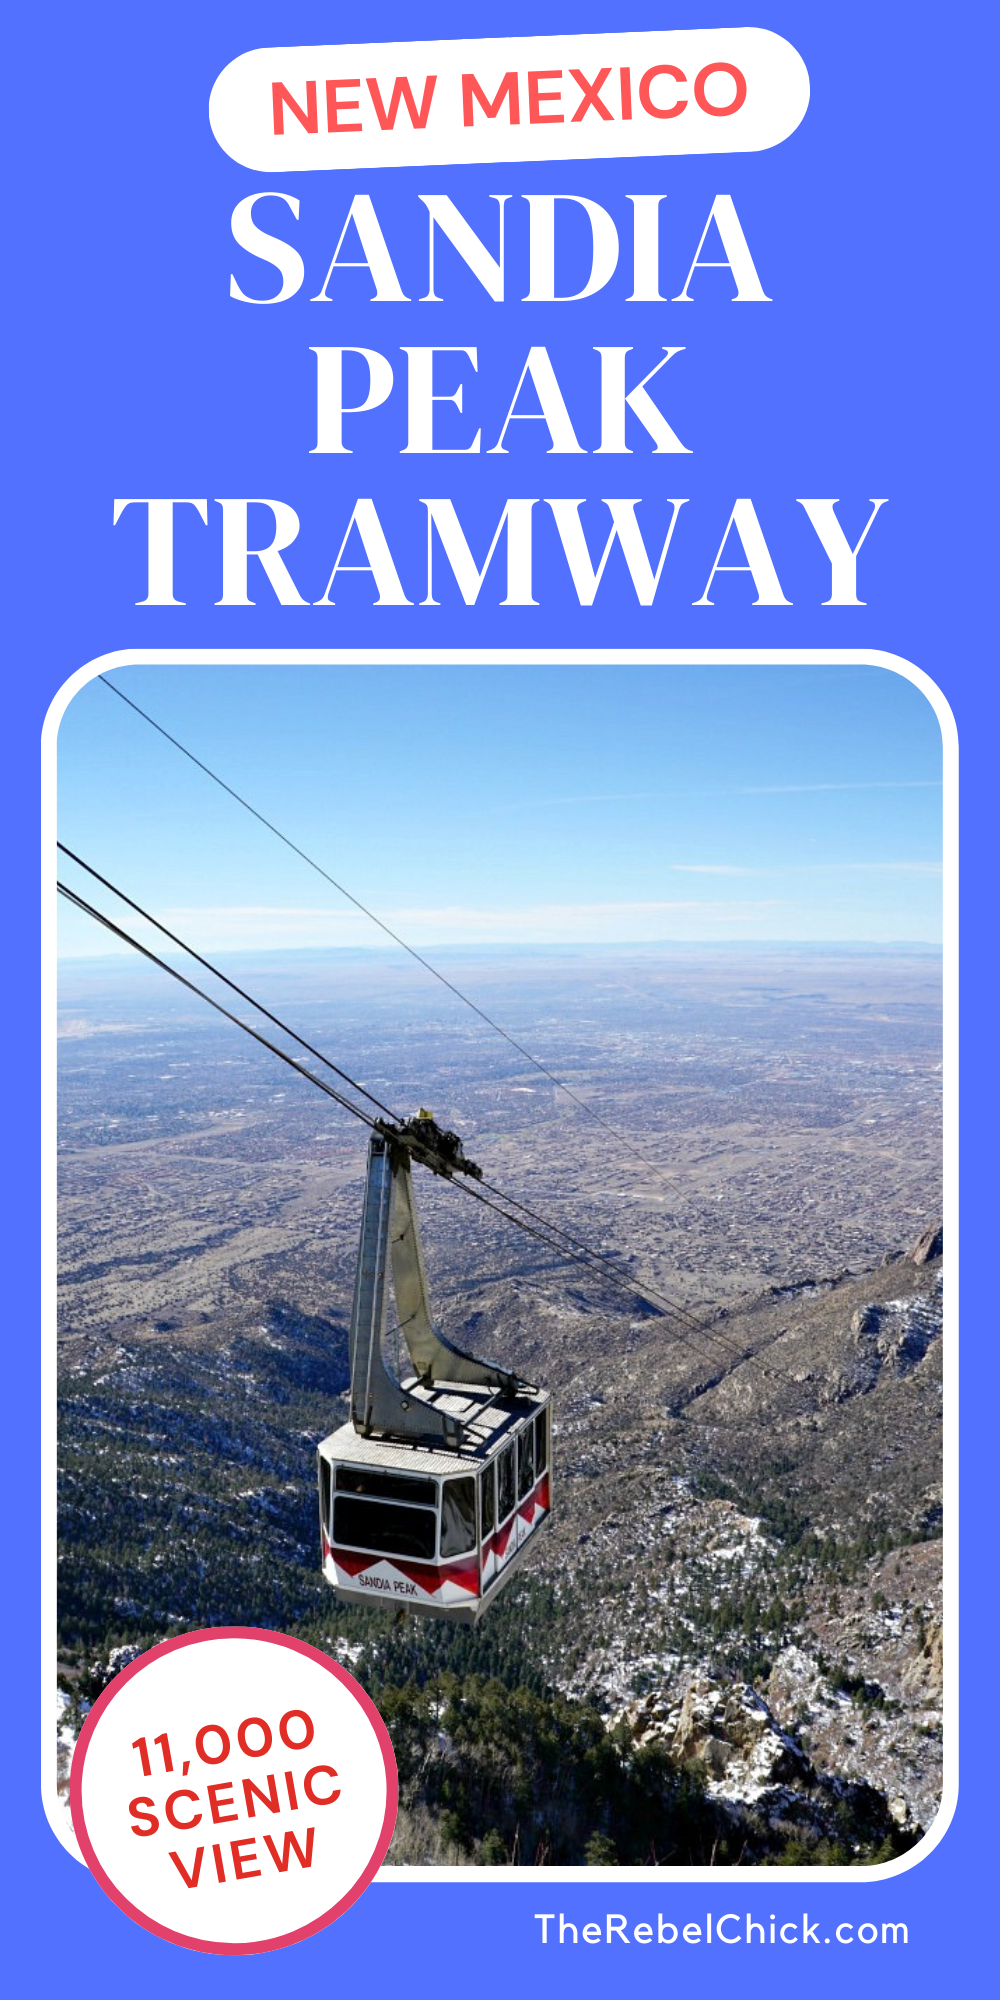 SANDIA PEAK TRAMWAY - THE LONGEST TRAMWAY IN THE WORLD